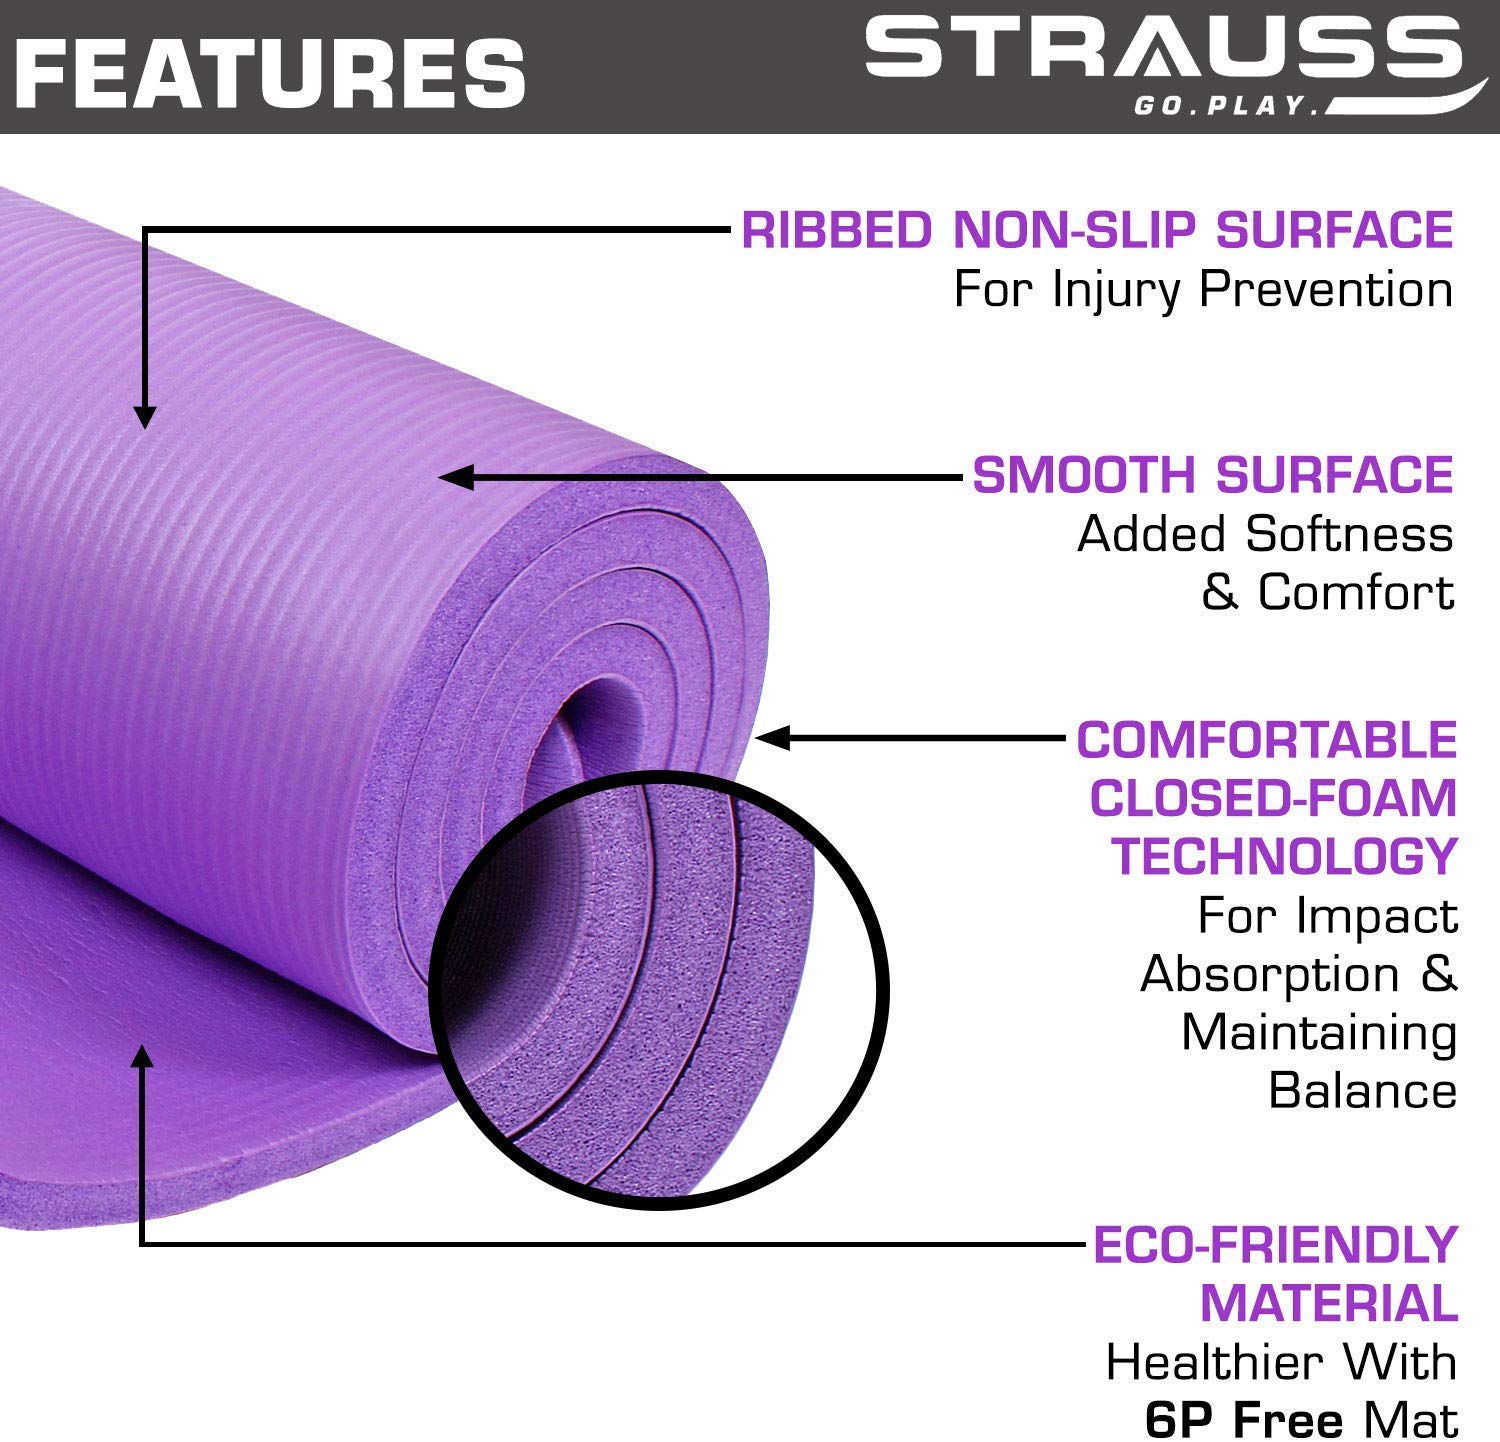 Strauss Yoga Mat (Floral) 10 MM NBR, Yoga Block (Purple) Pair, Anti-Slip Yoga Towel (Blue) and Yoga Belt (Blue)